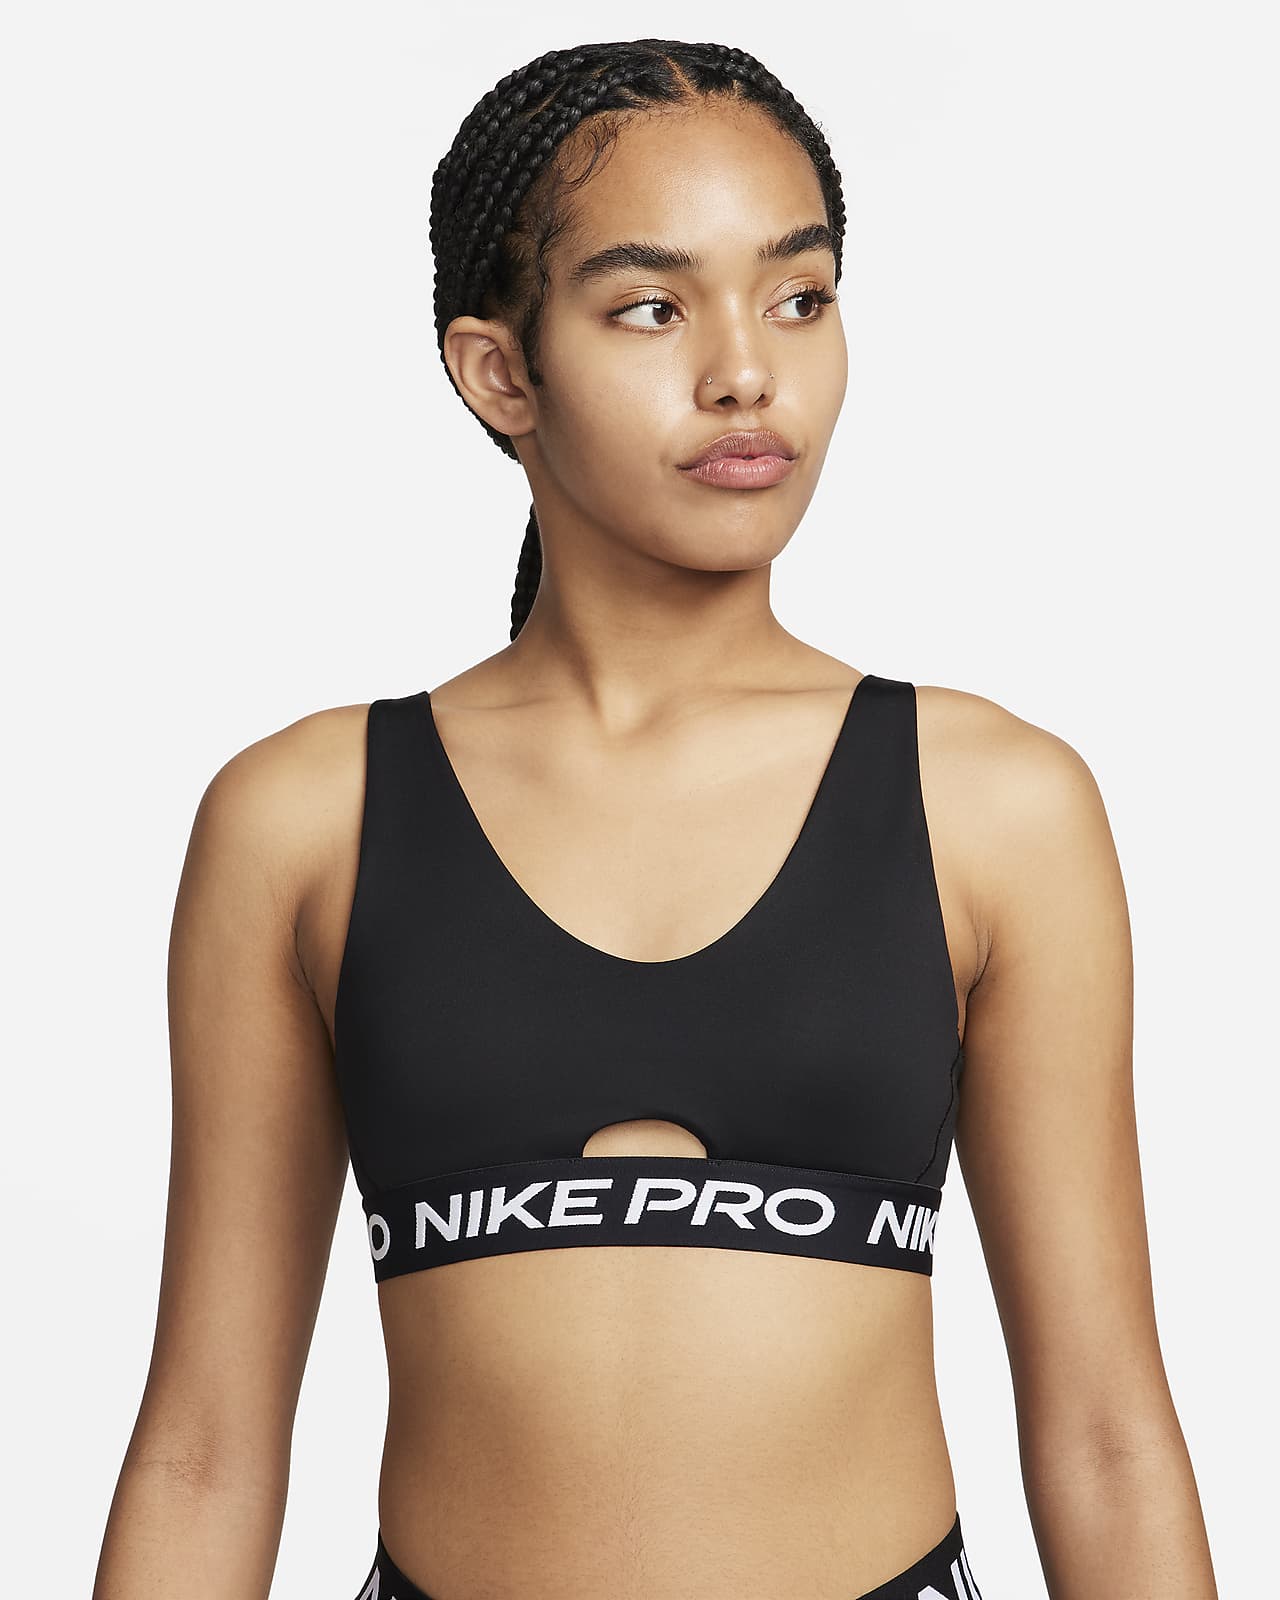 Women's sports bra Nike Indy